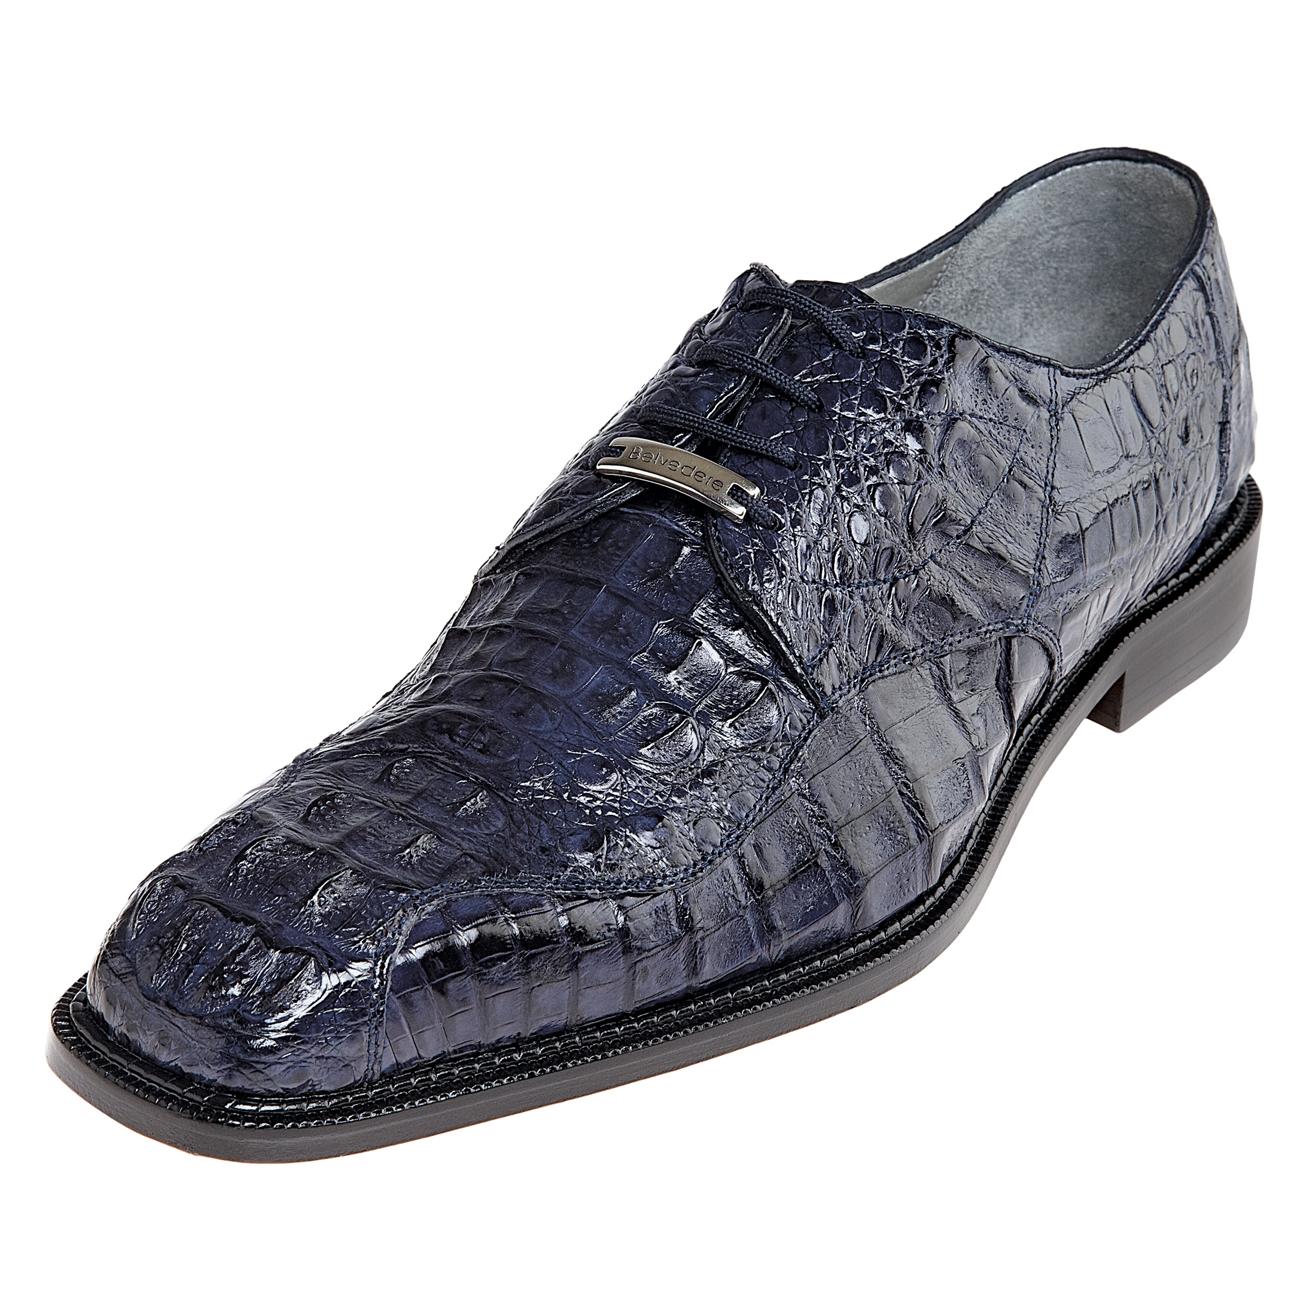 belvedere crocodile shoes